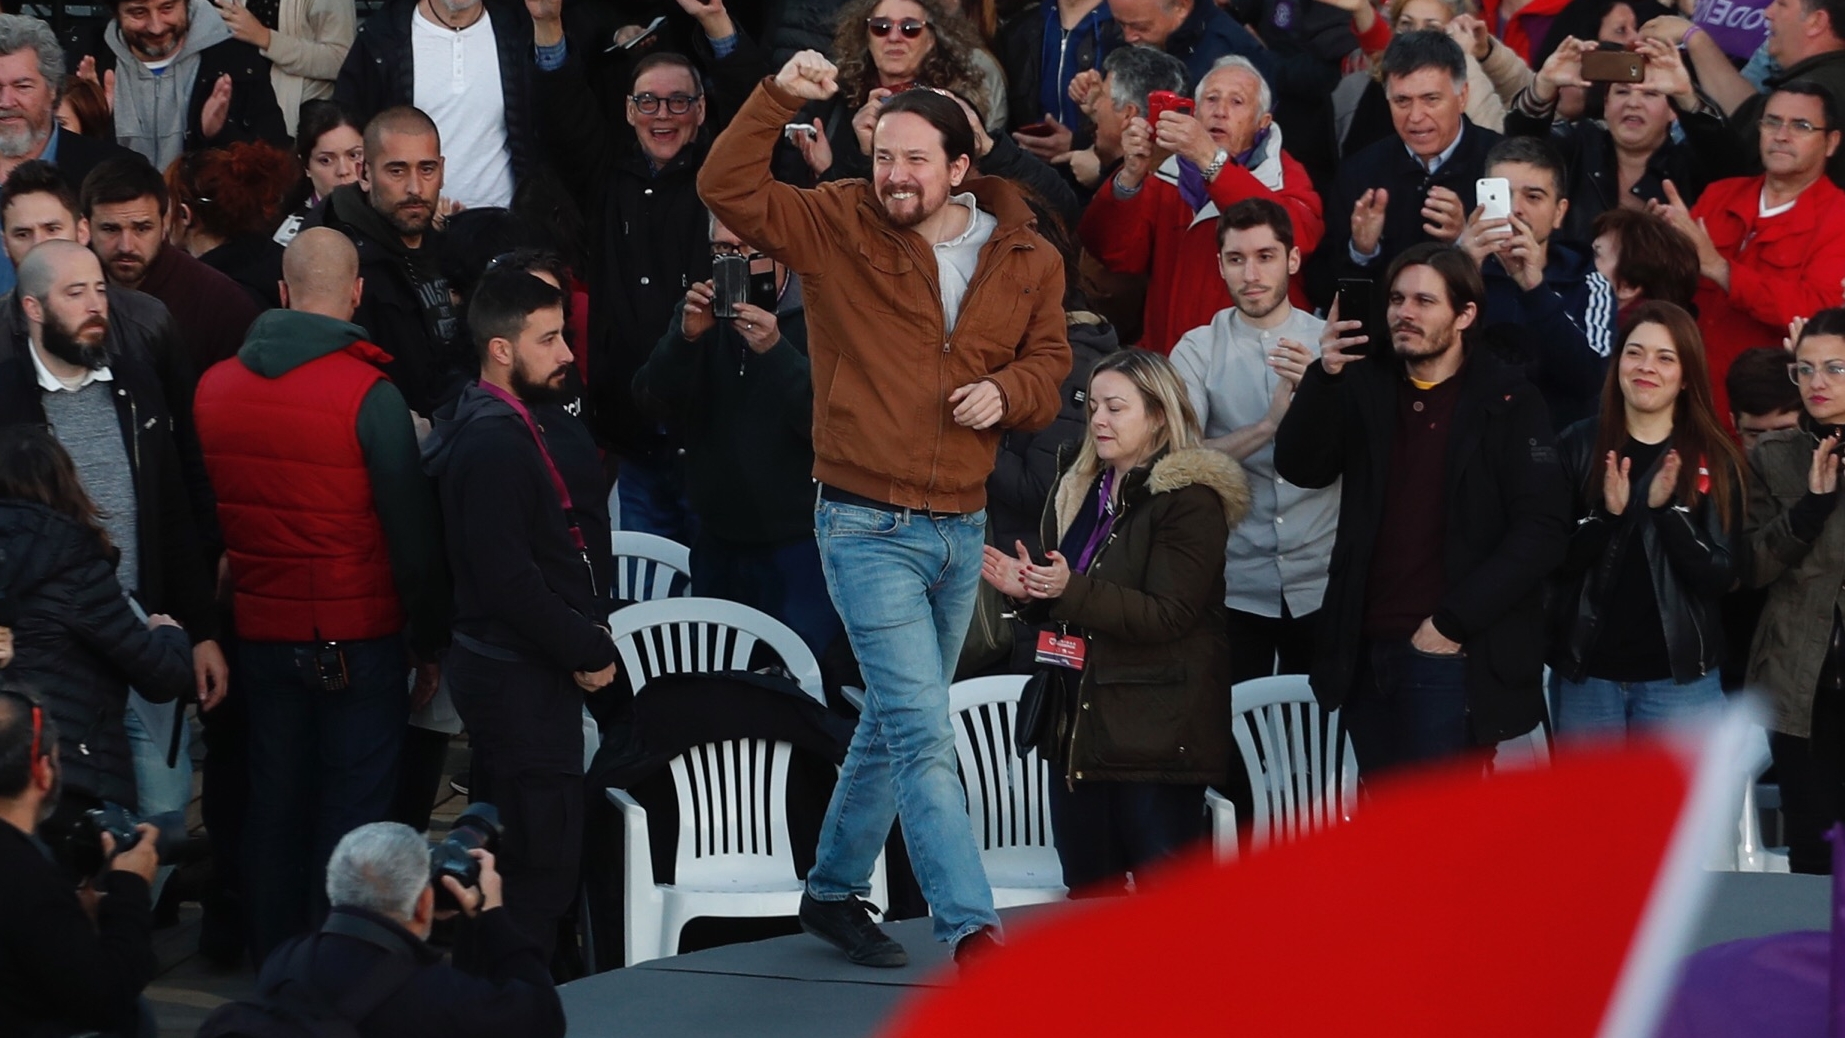 Un juez cita a declarar a miembros de la cúpula de Podemos tras una denuncia por financiación irregular | España